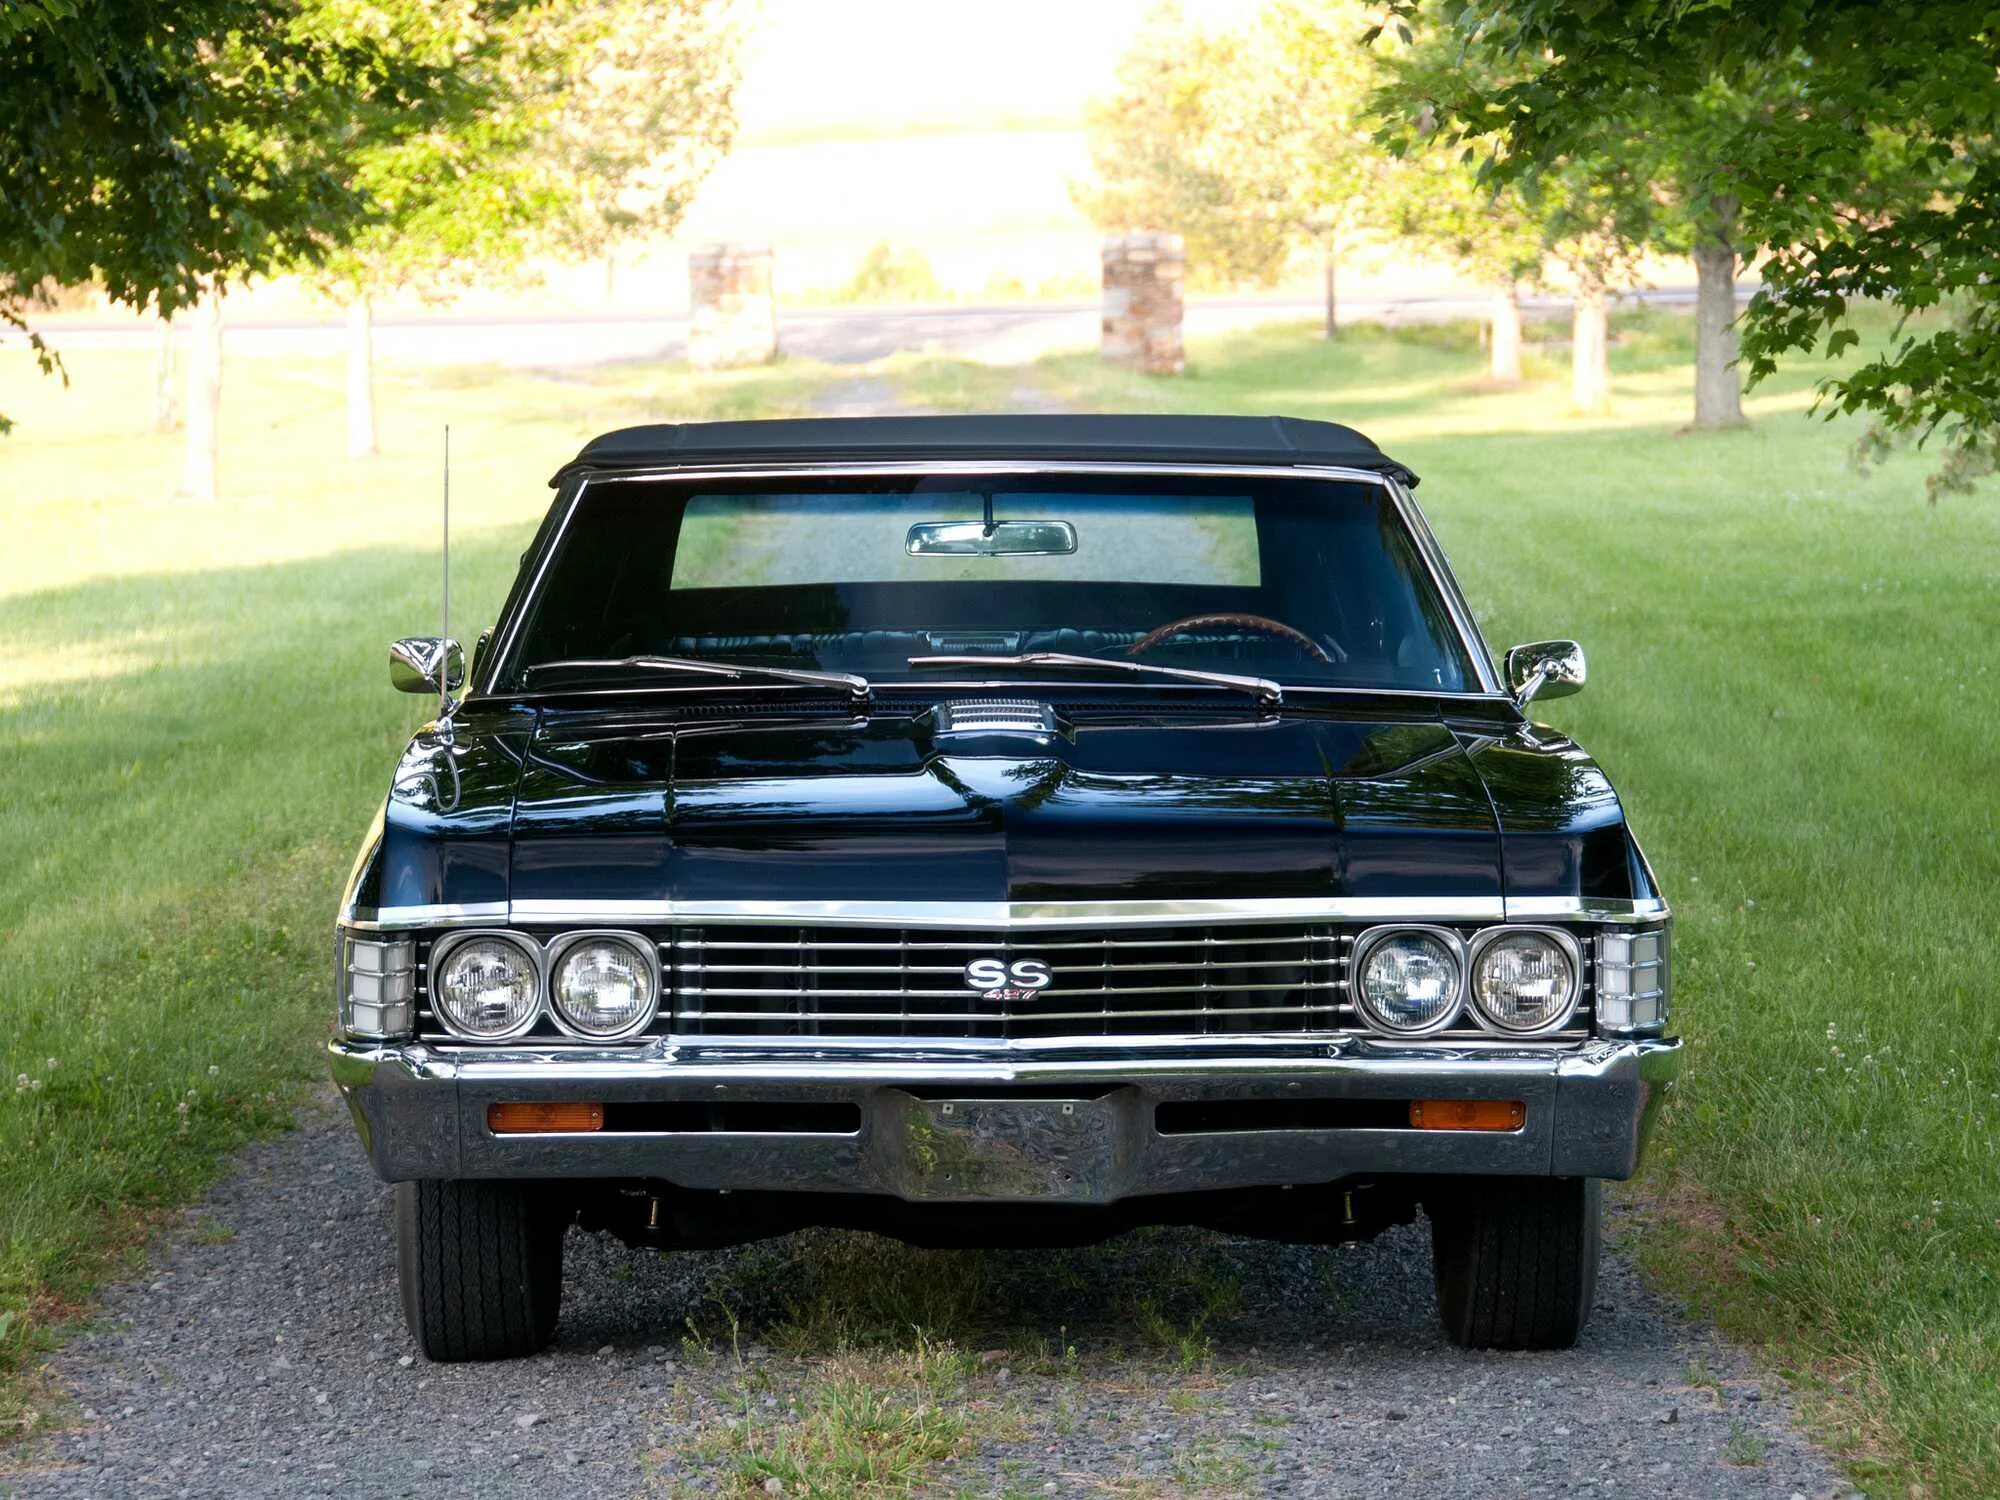 Chevrolet impala год. Chevrolet Impala 1967. Chevrolet Импала 1967. Шевроле Импала 67. Шевроле Импала СС 1967.